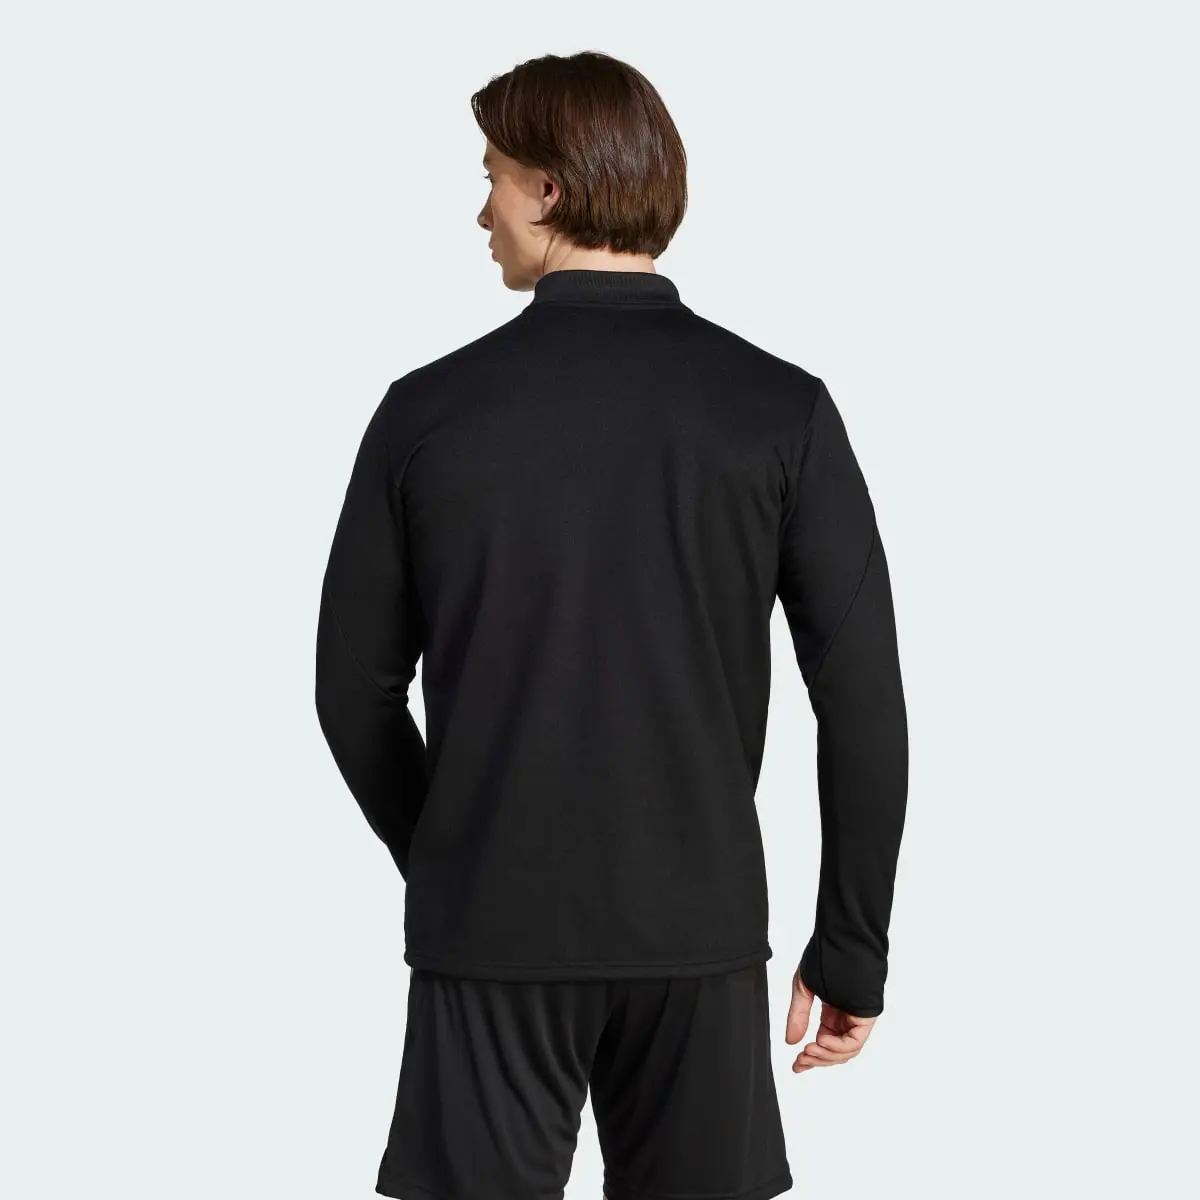 Adidas All Blacks AEROREADY Warming Long Sleeve Fleece Top. 3